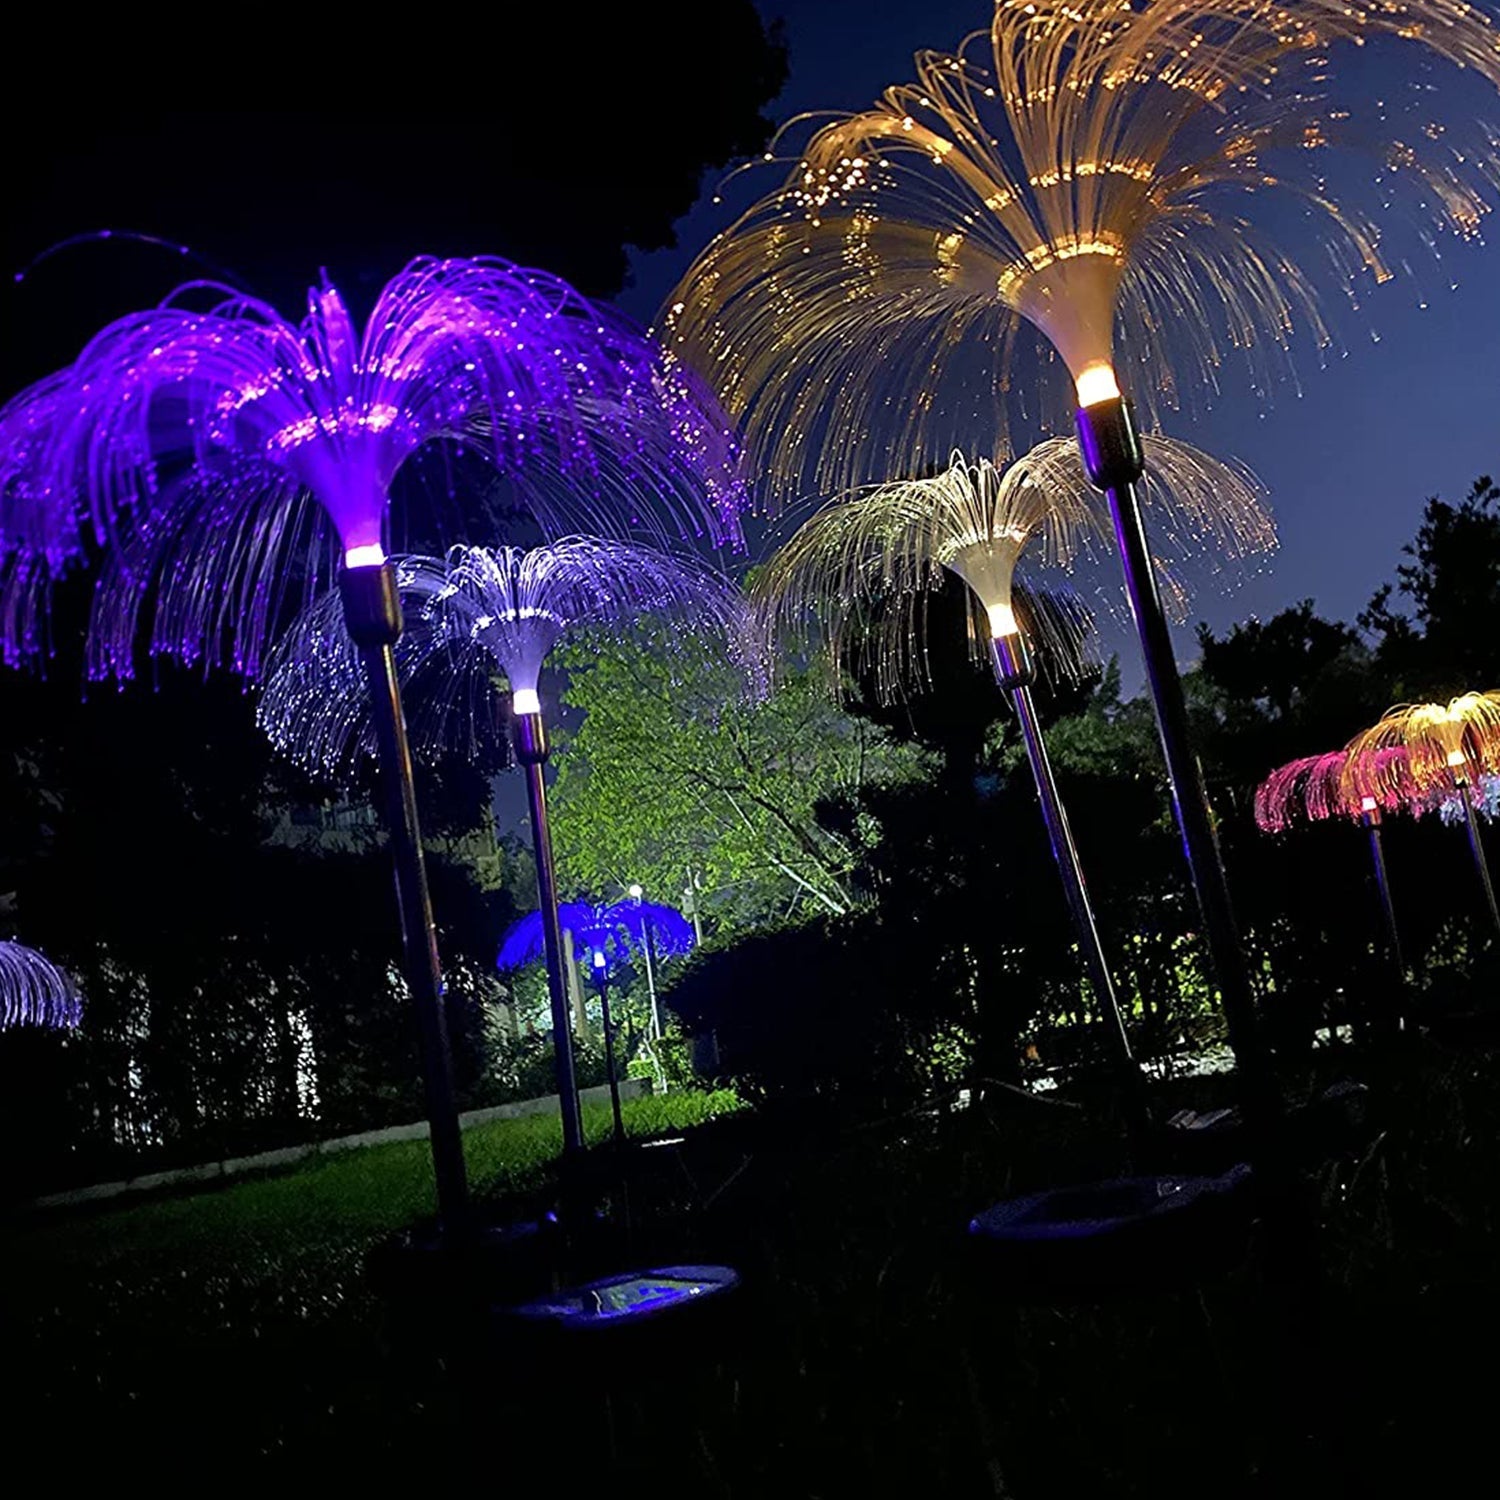 6616 2pcs Garden Solar Outdoor Lights Decorative , 7 Colors Changing RGB Light Waterproof Flower Jellyfish Firework Decor for Garden Patio Landscape Pathway Yard Holiday Decor DeoDap